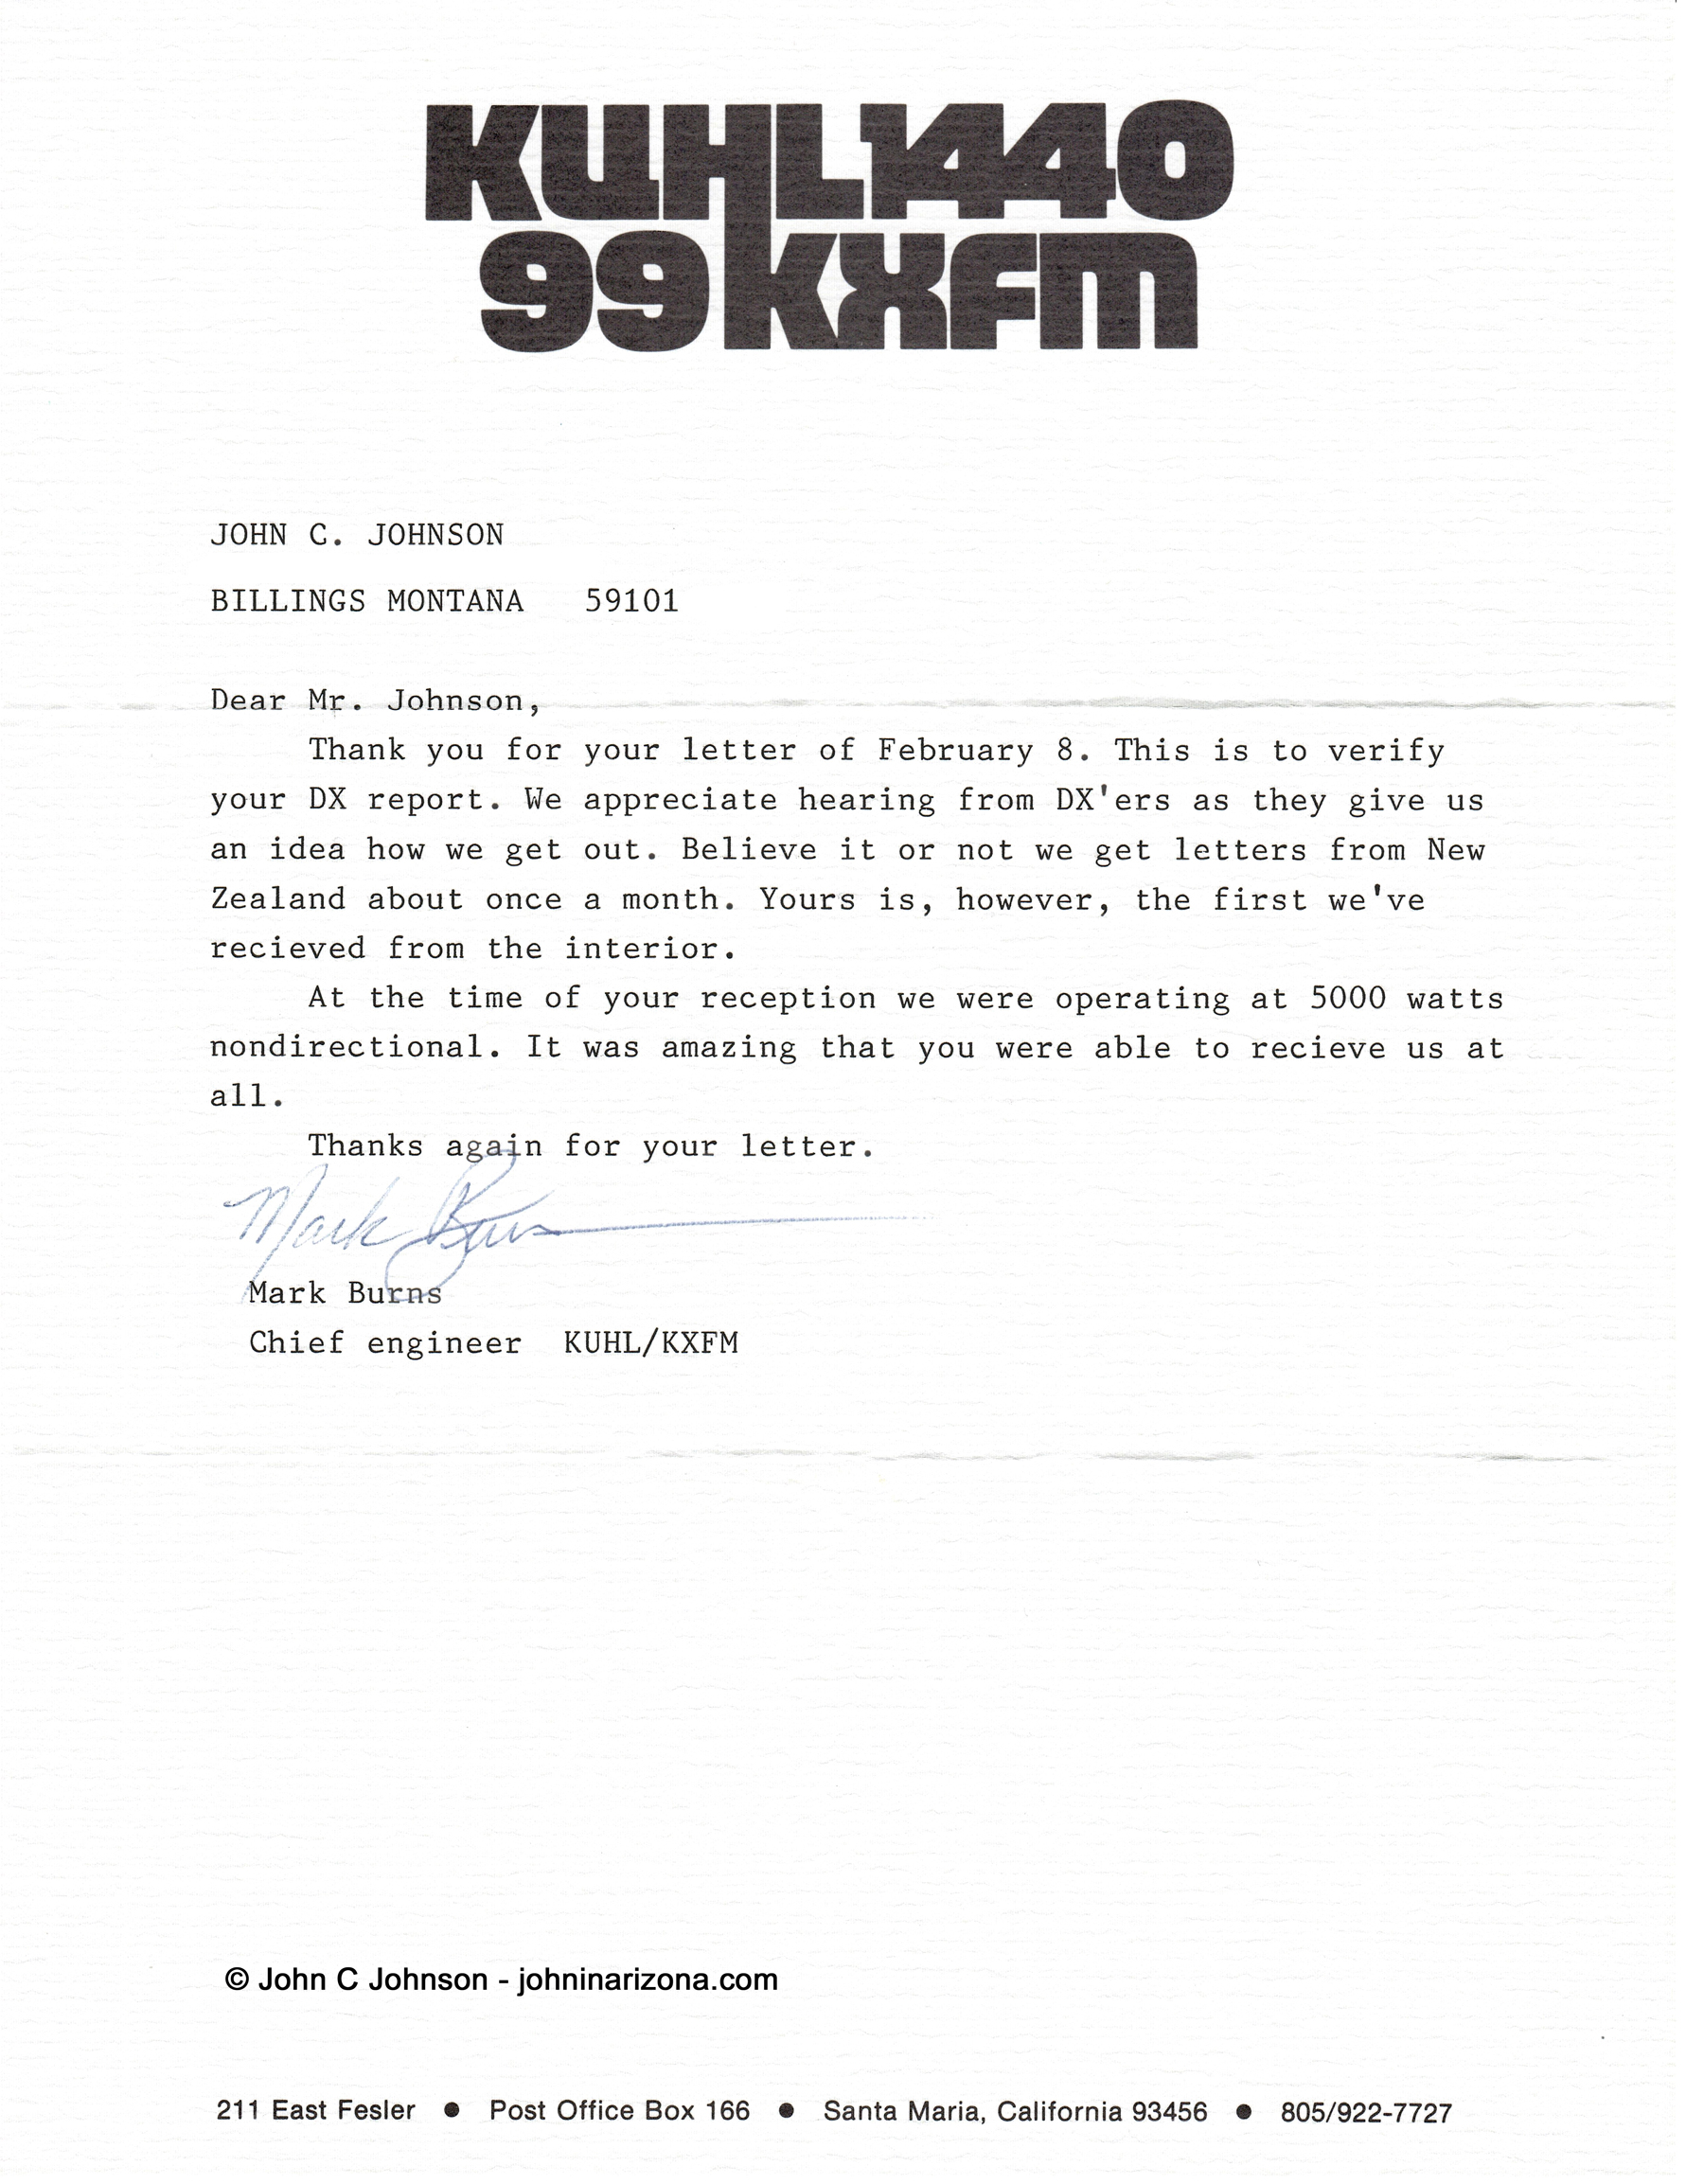 KUHL Radio 1440 Santa Maria, California